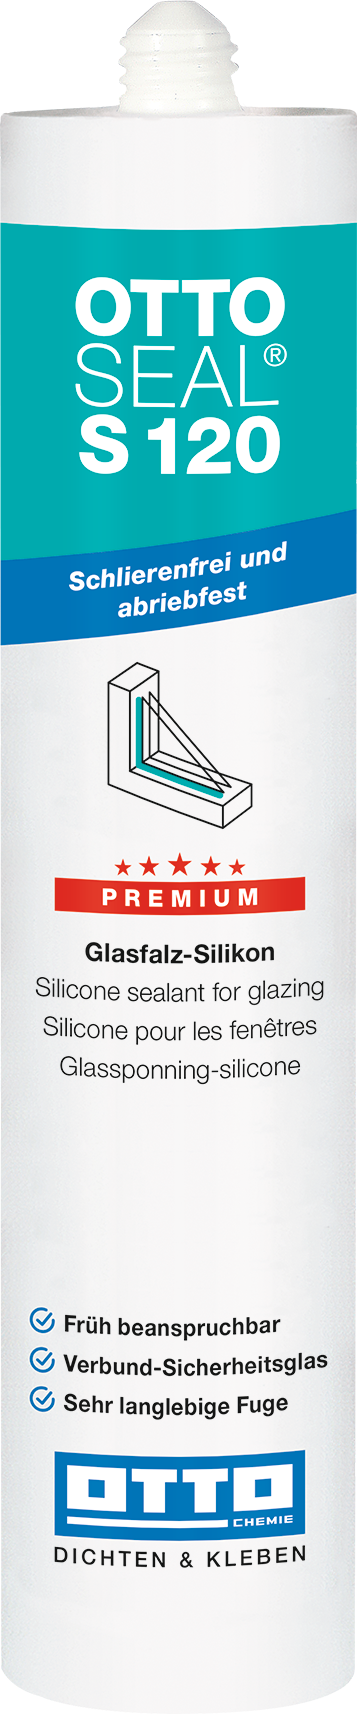 Ottoseal S120 Premium-Glasfalz-Silikon Transparent C00 310ml